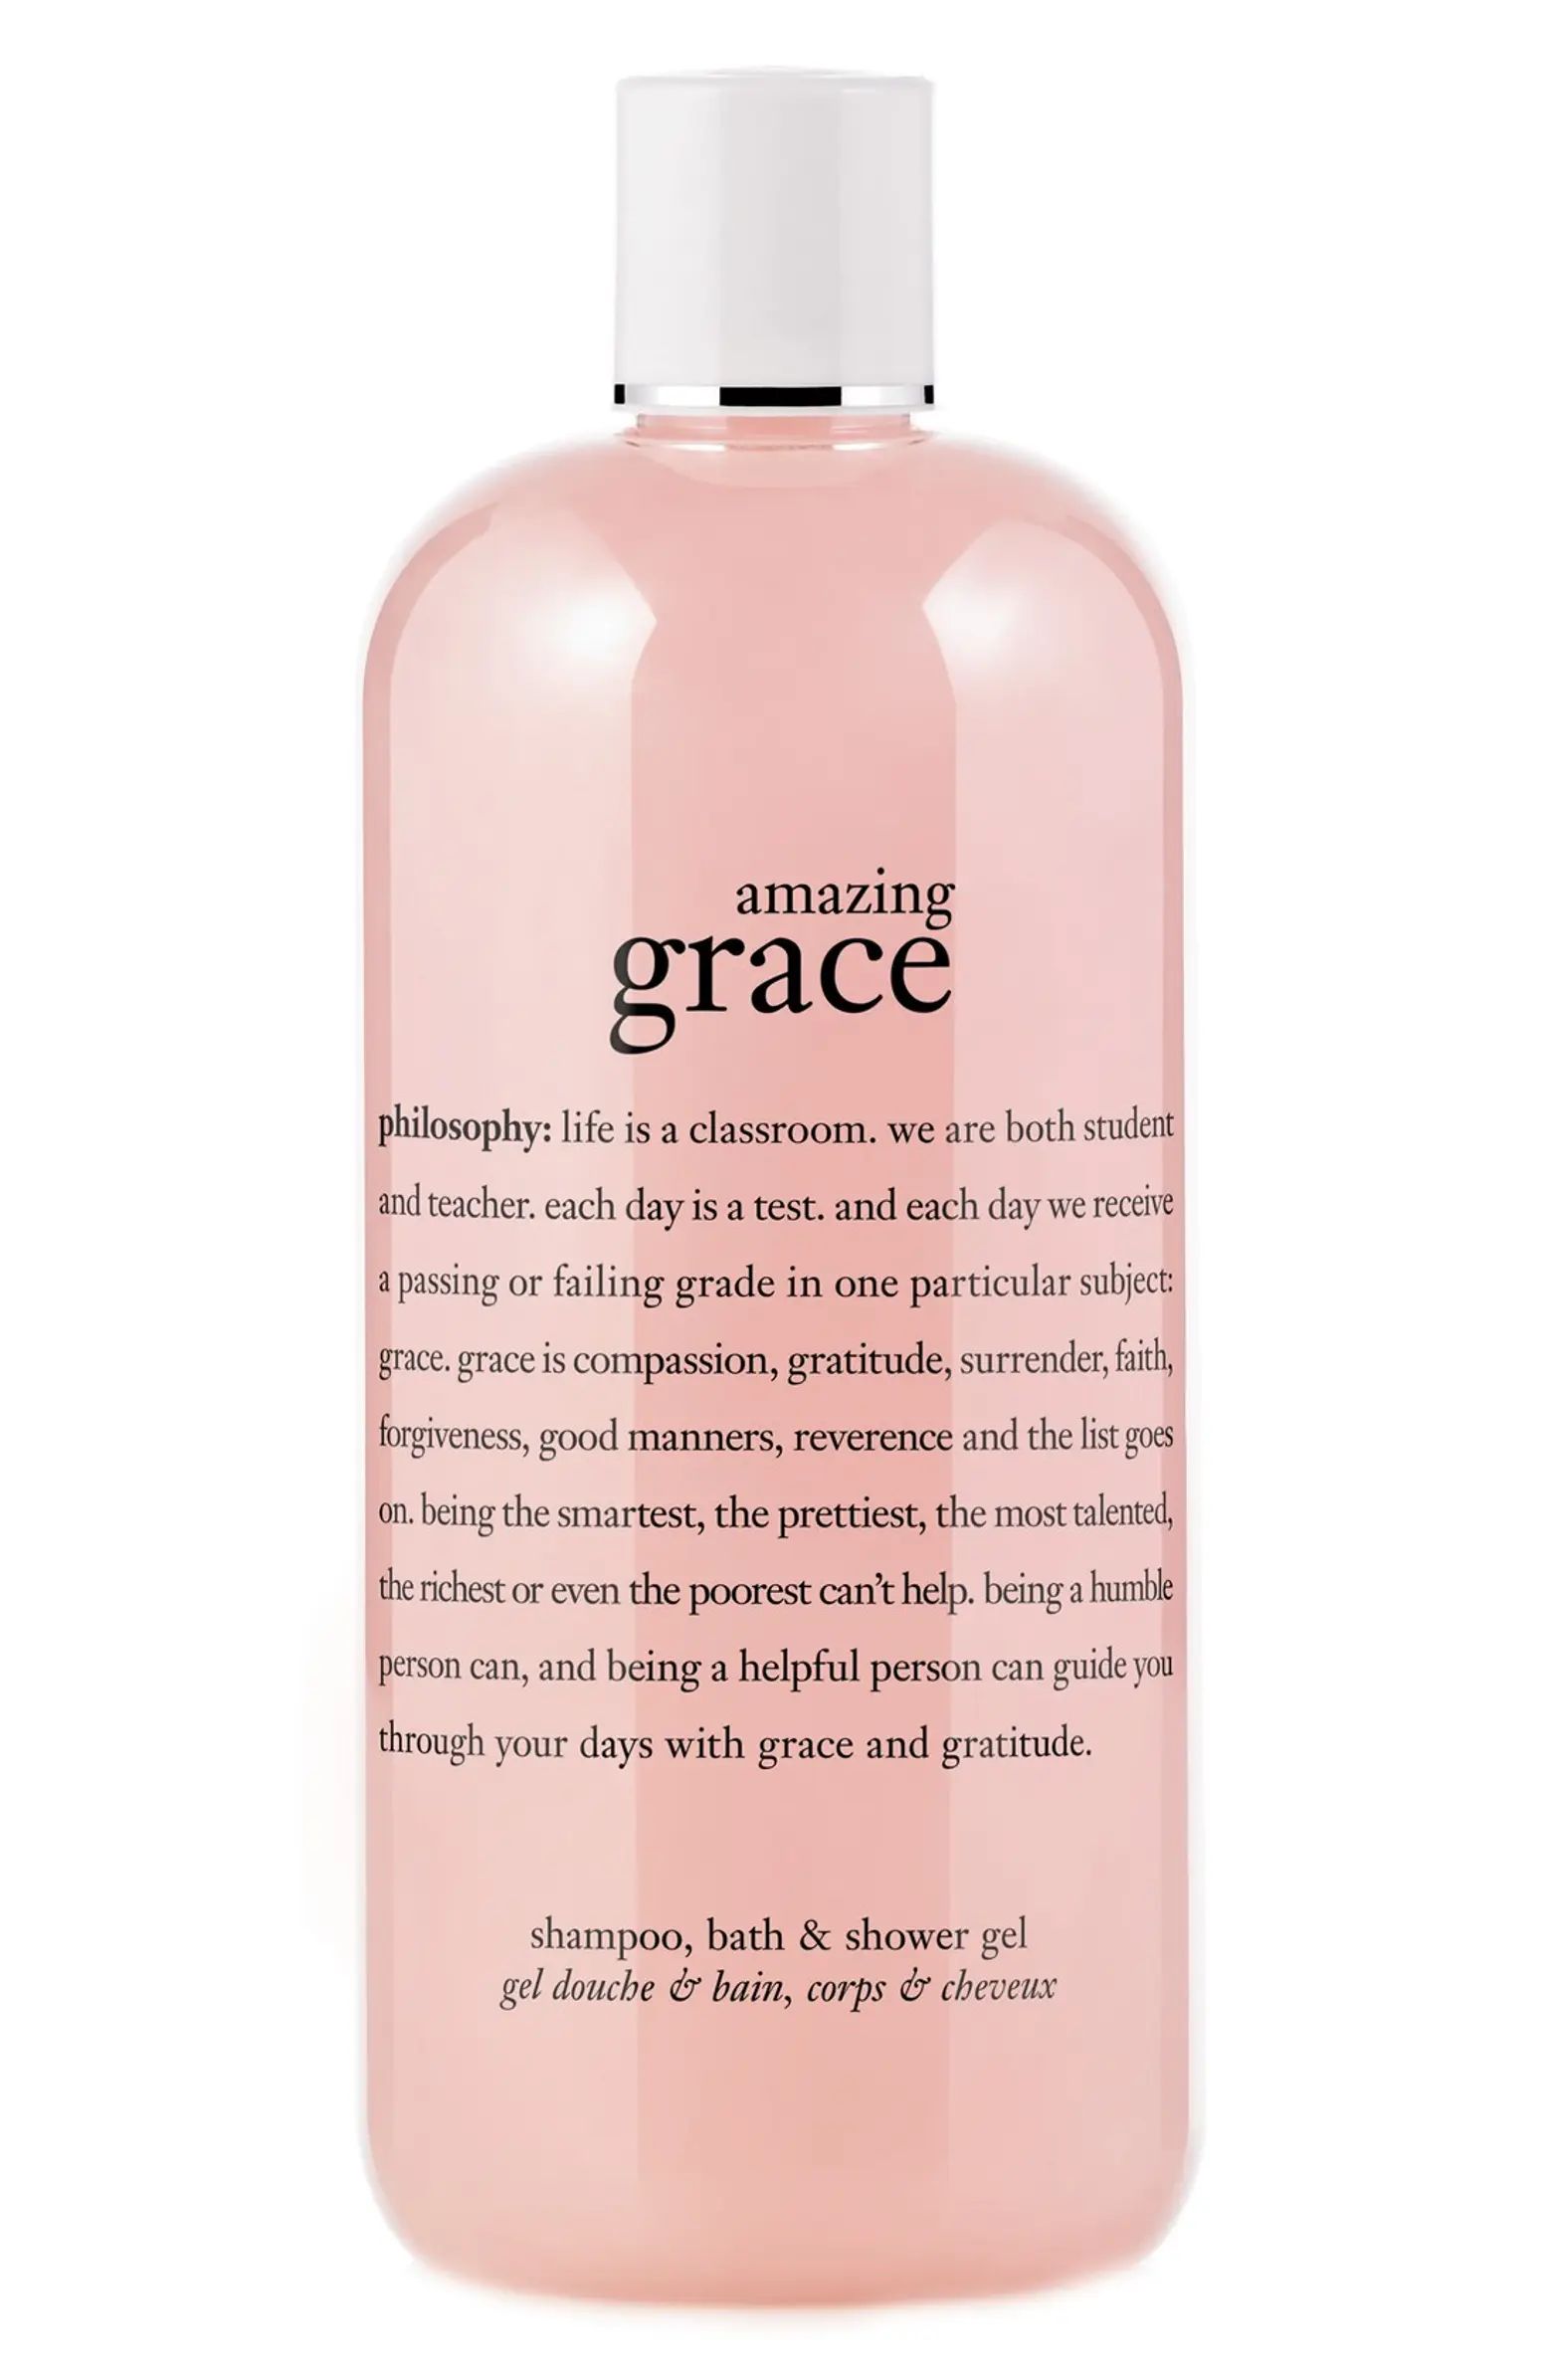 amazing grace 3-in-1 shampoo, bath & shower gel | Nordstrom